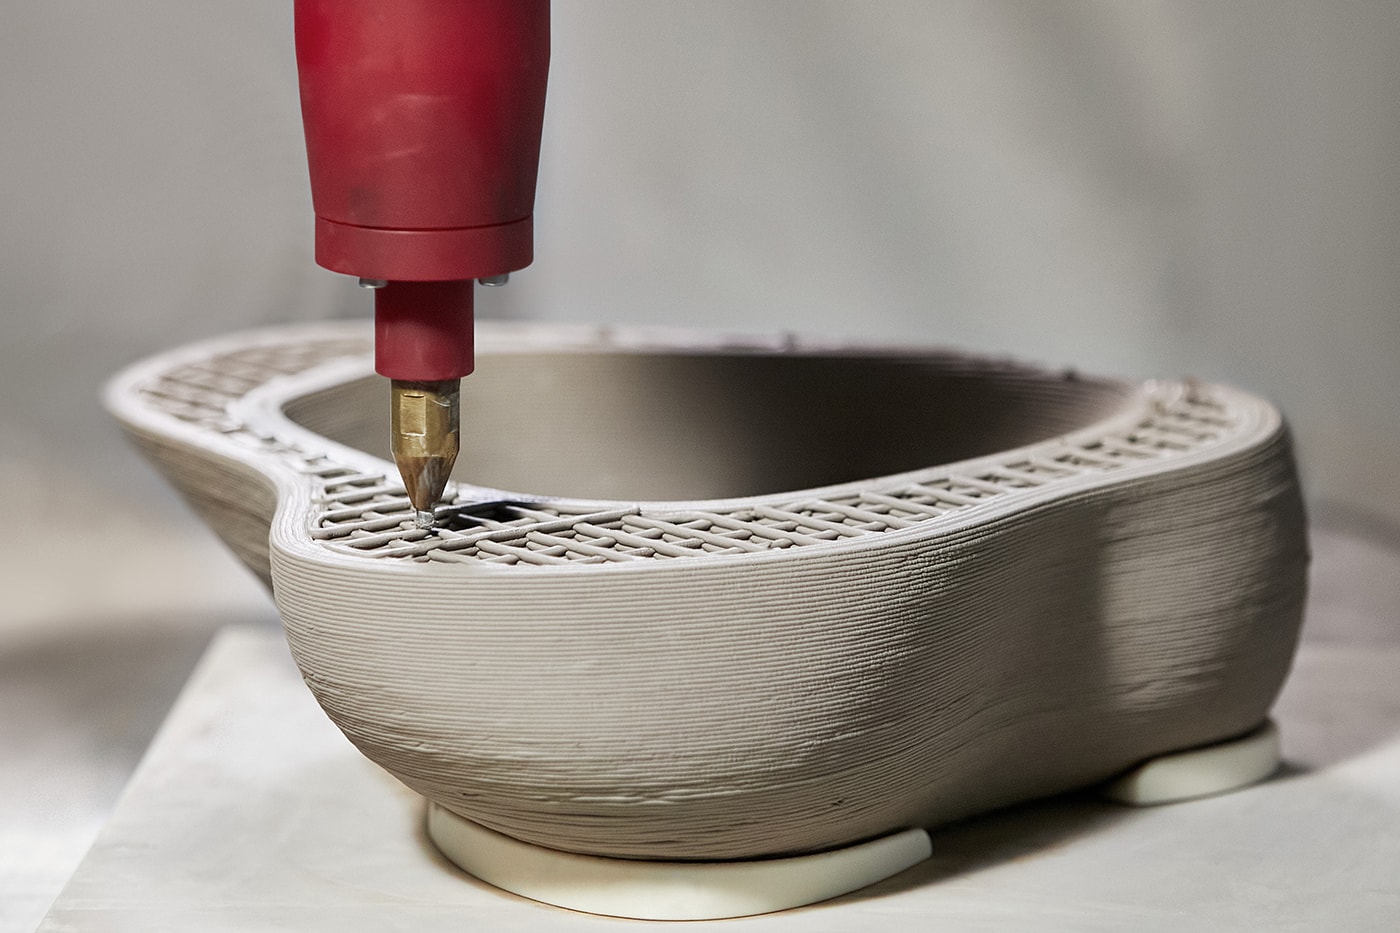 Daniel Arsham Kohler Sink Design Collaboration Rock.01 3-D printed ceramics technology